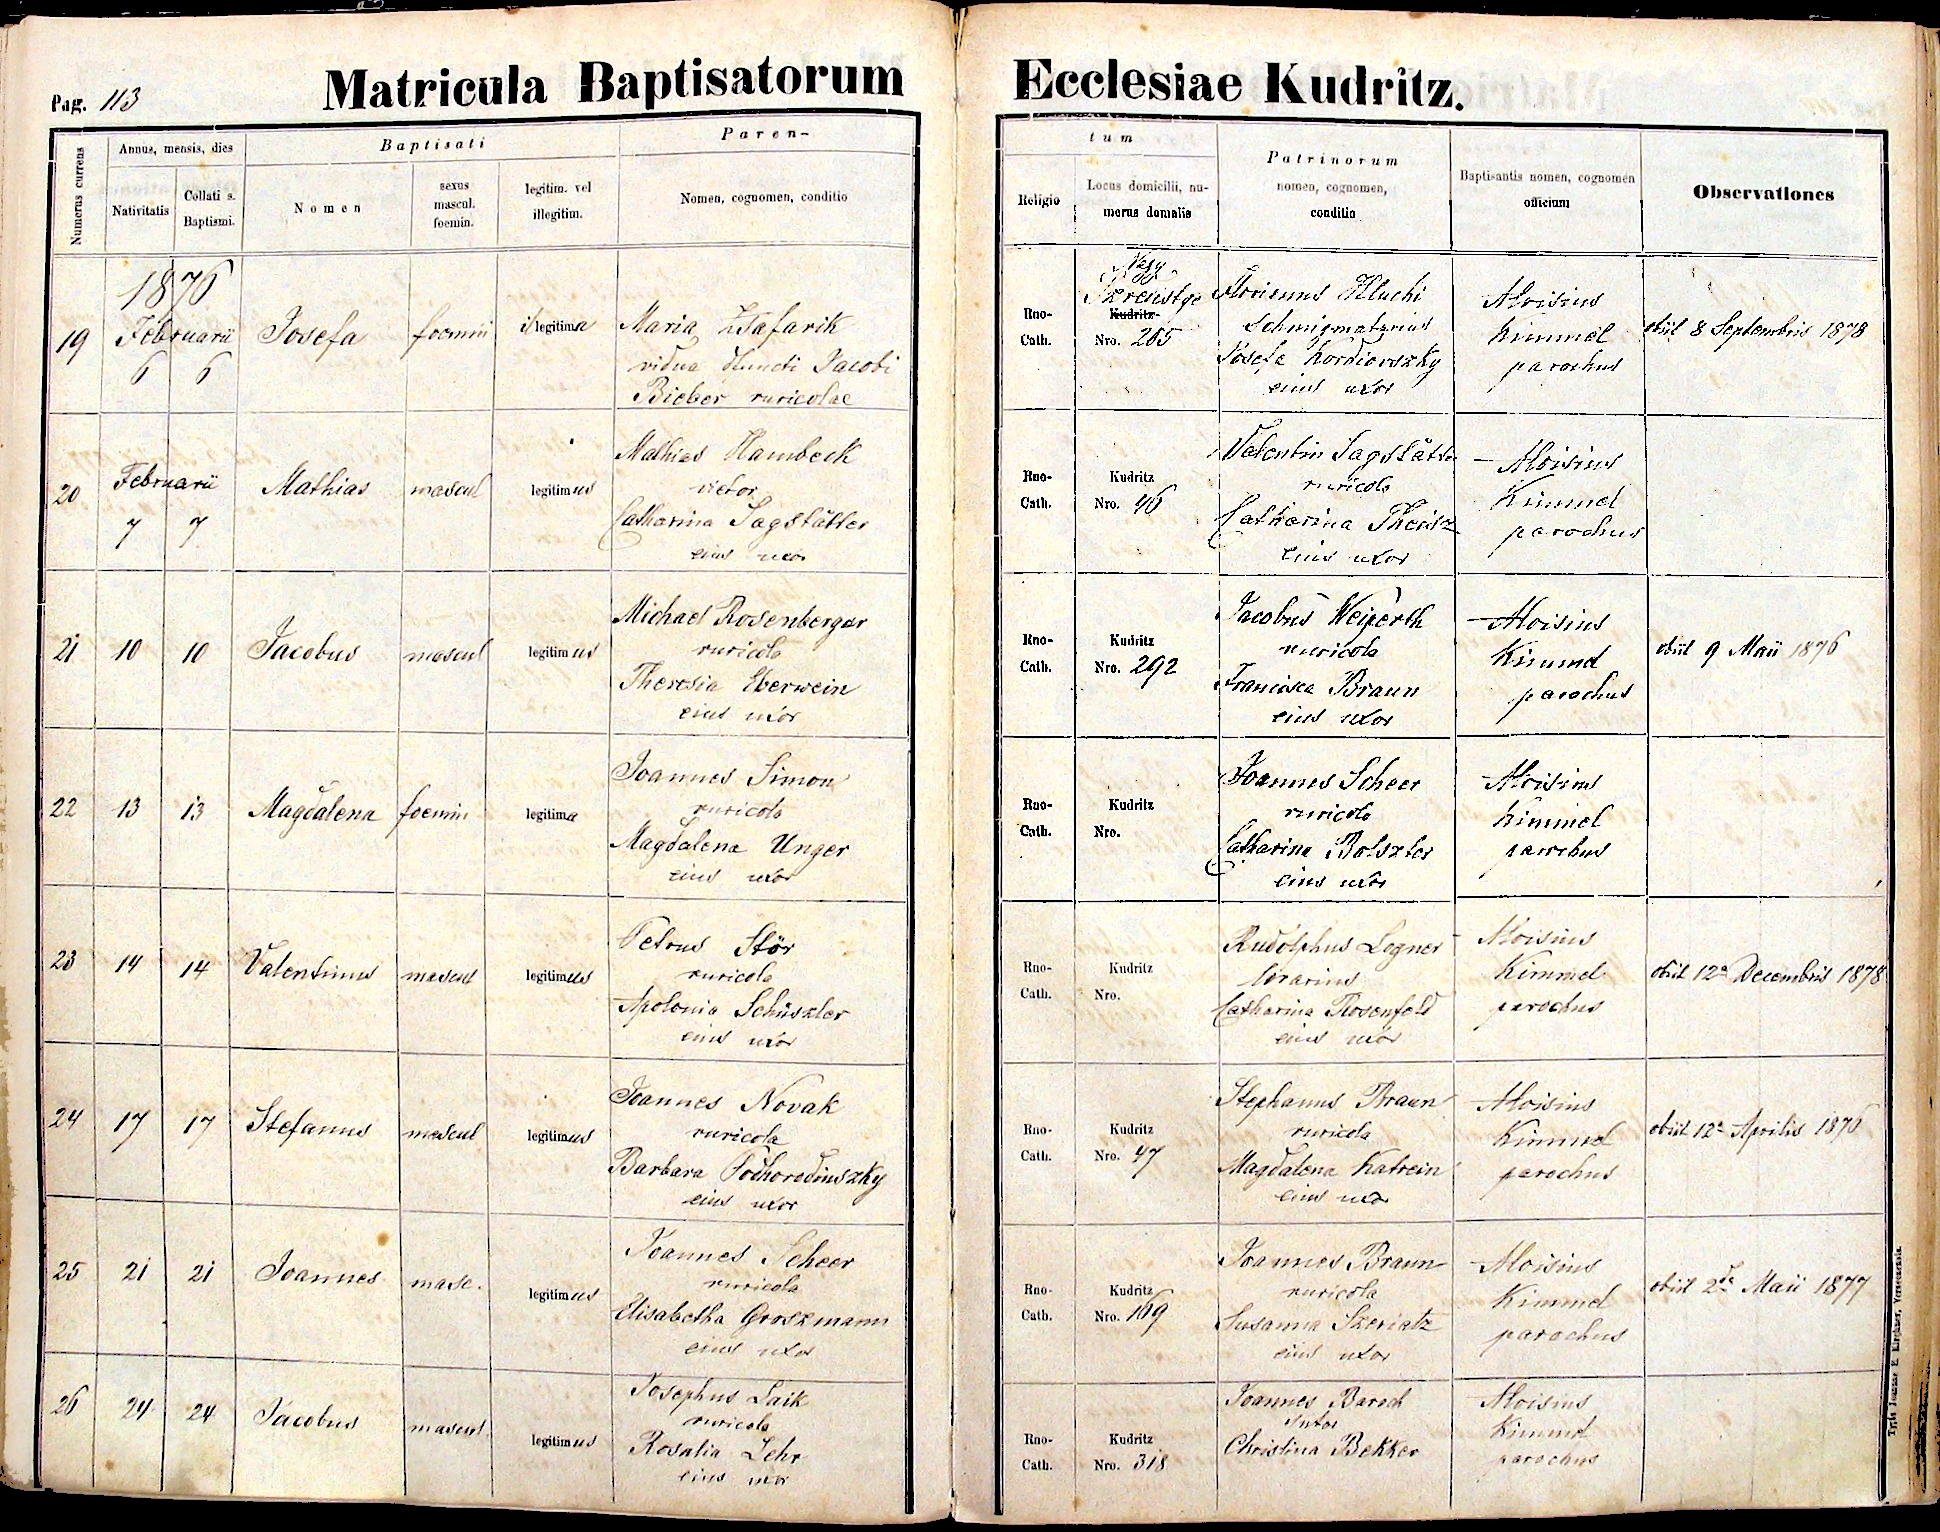 images/church_records/BIRTHS/1870-1879B/1876/113